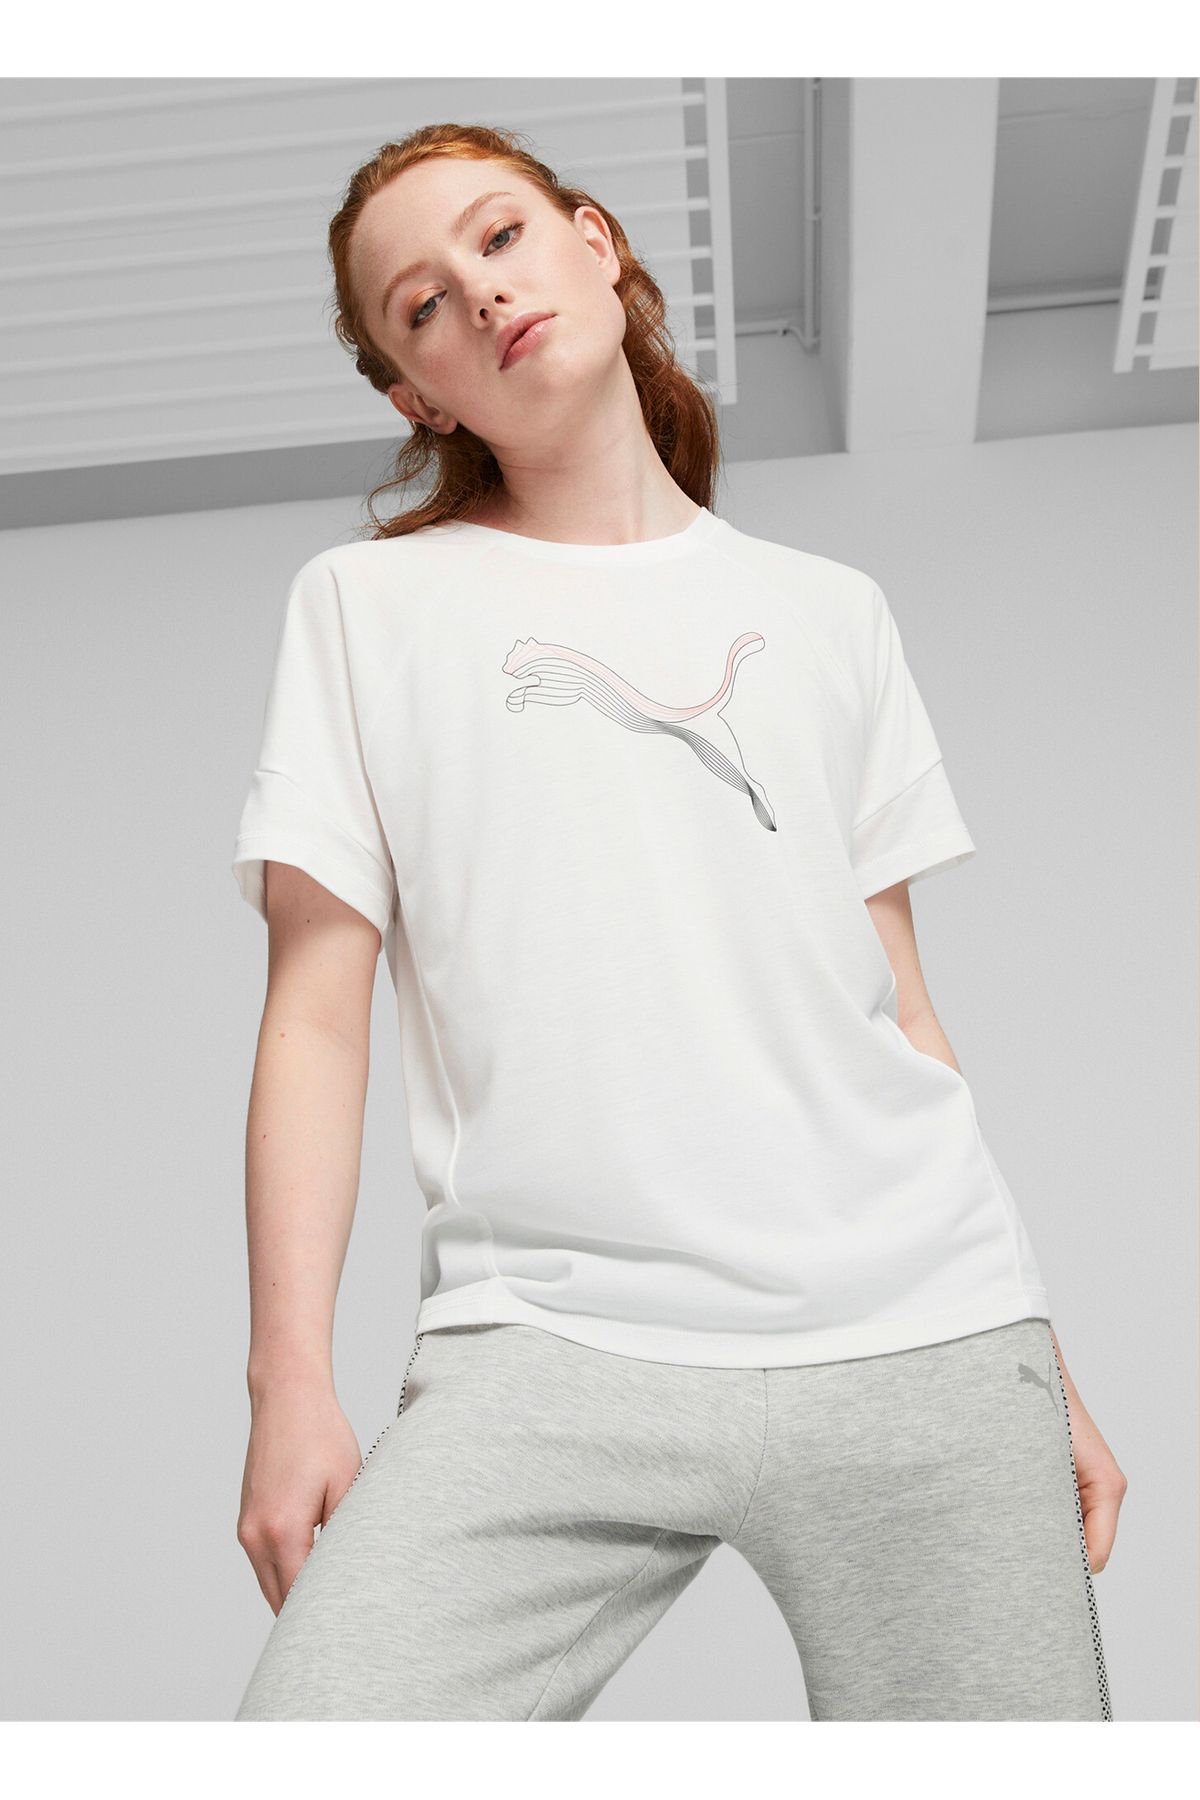 Puma T-shirt, S, Beyaz